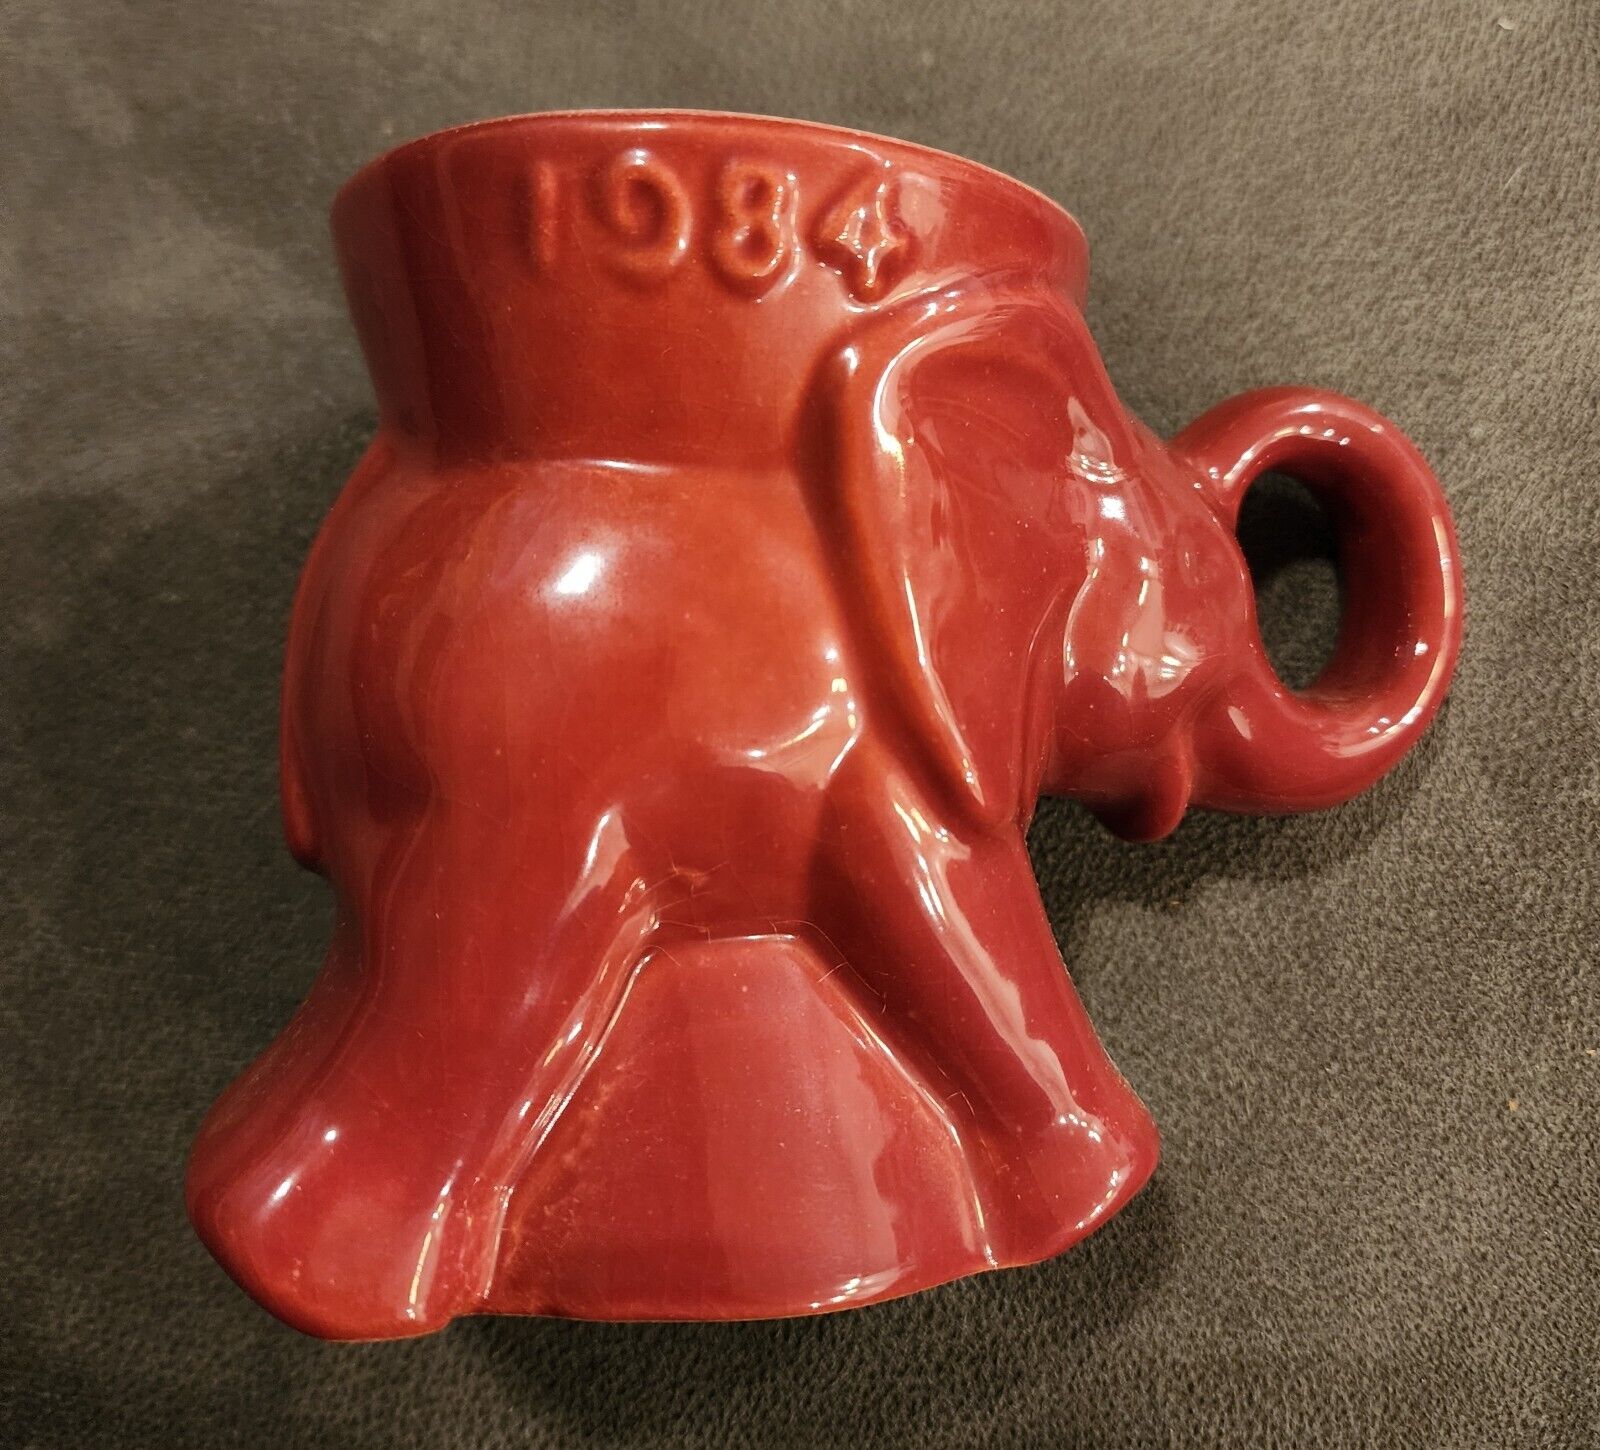 Frankoma ceramic political mug 1984 GOP (Ronald Reagan time) elephant